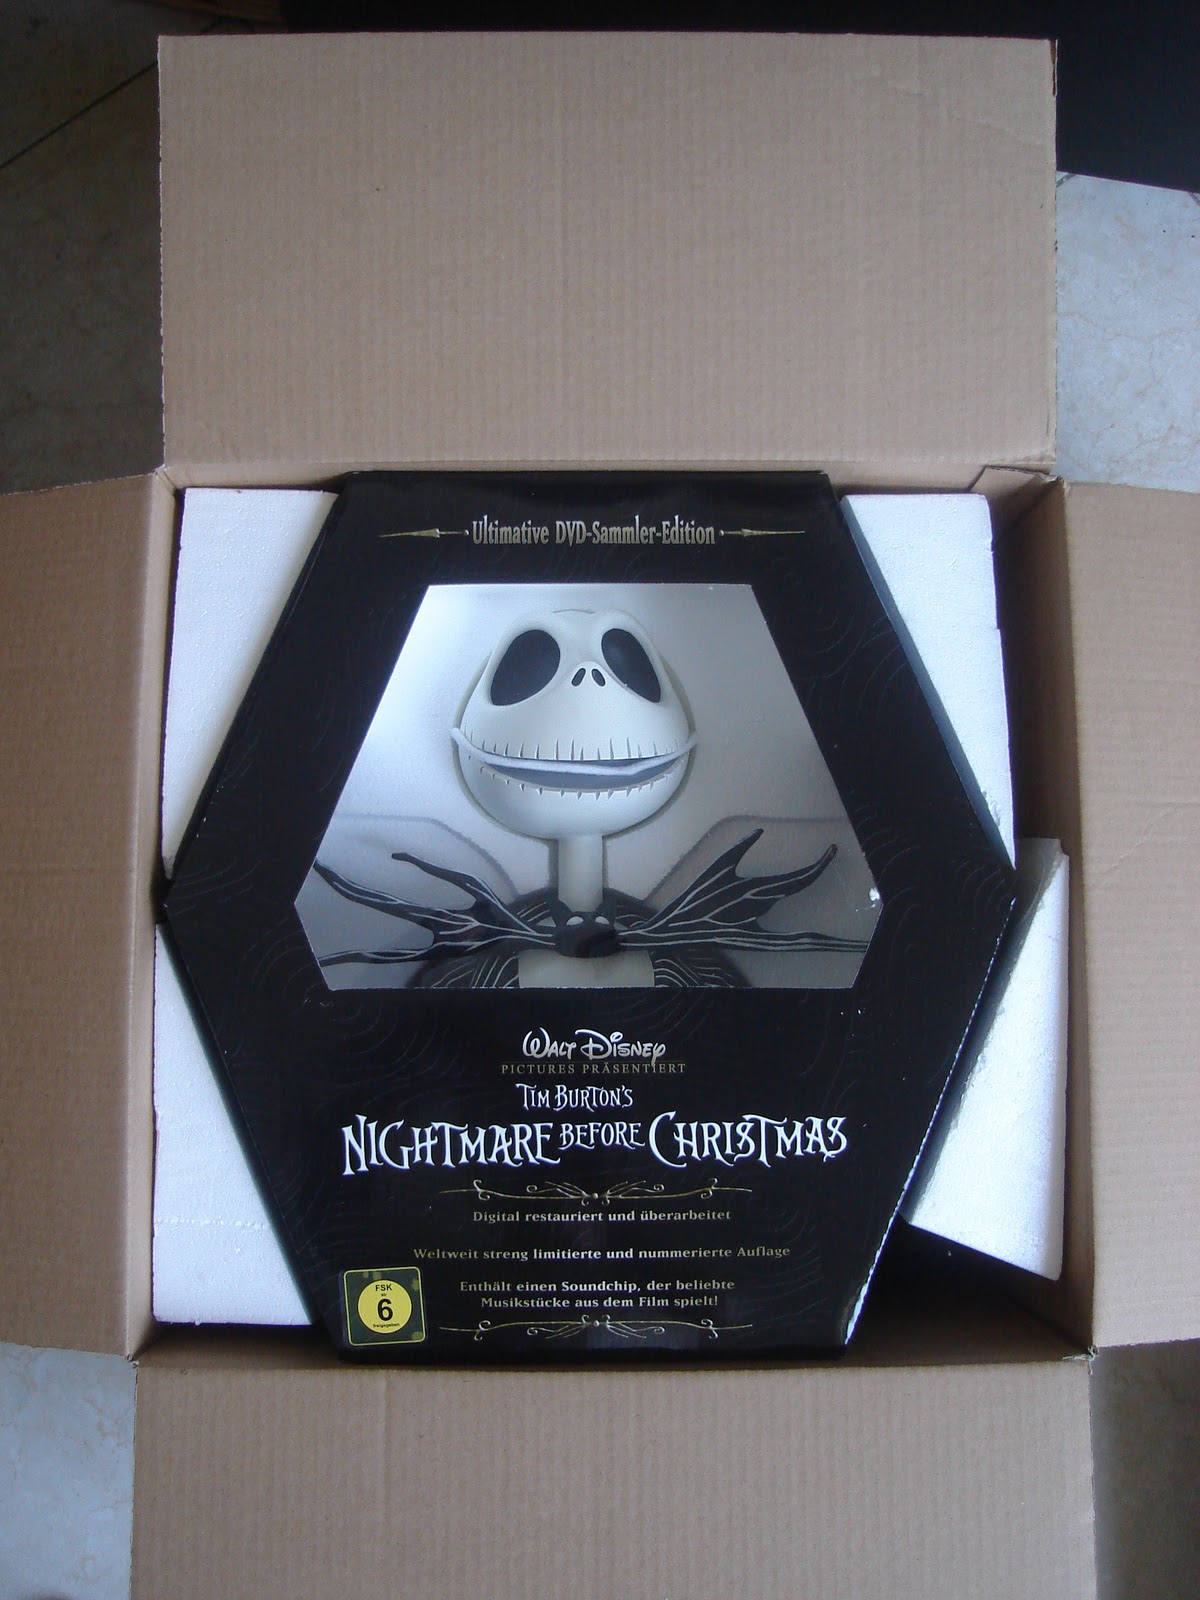 ... Nightmare Before Christmas Ultimate DVD-Sammler-Edition [Numbered Bust